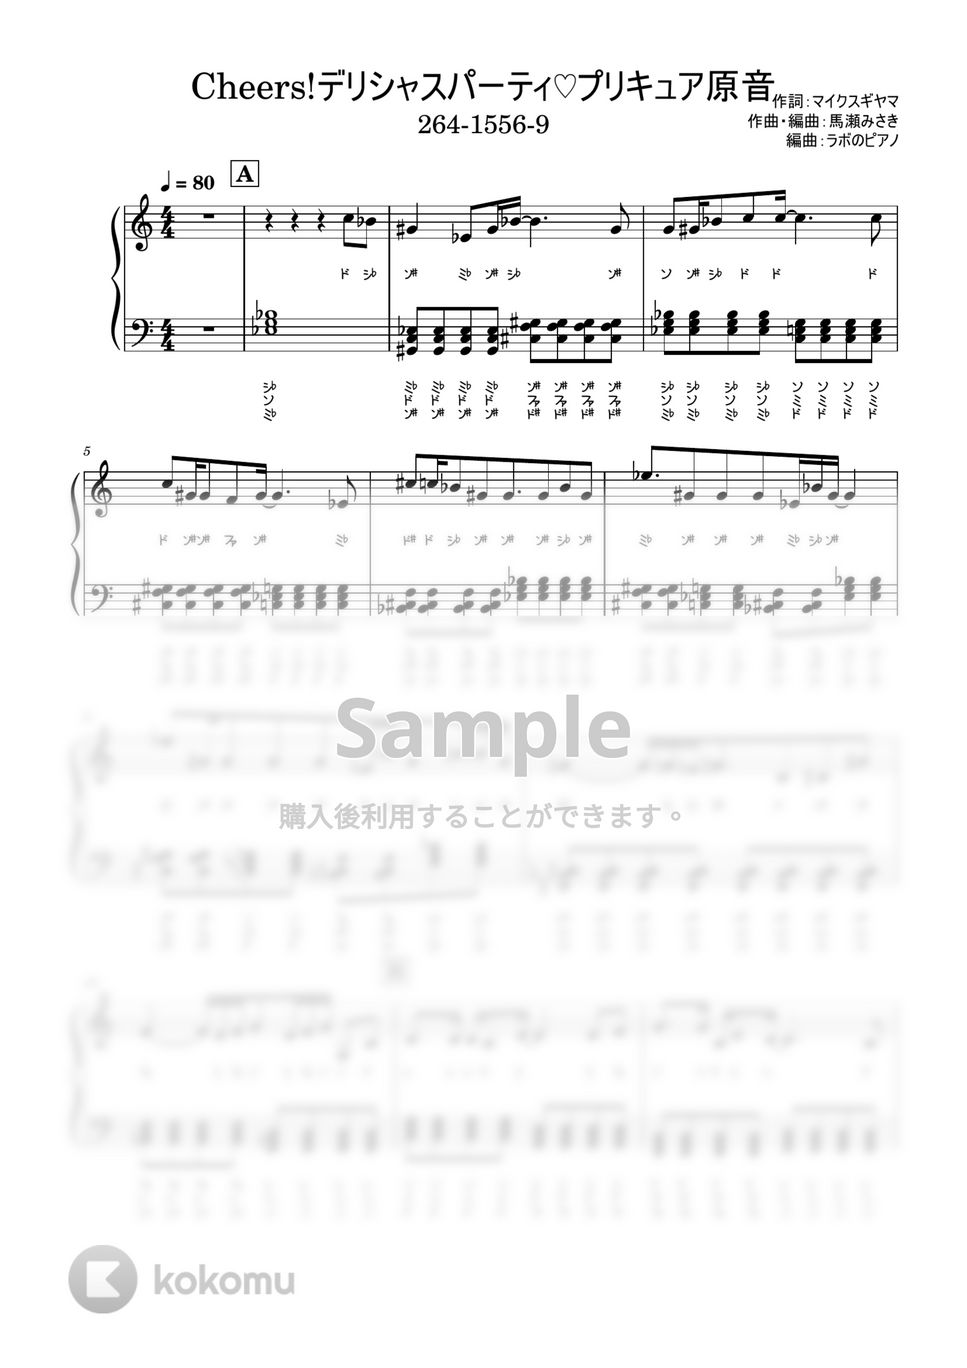 Machico - Cheers! デリシャスパーティ♡プリキュアOP ドレミ付 原音ver. by ラボのピアノ